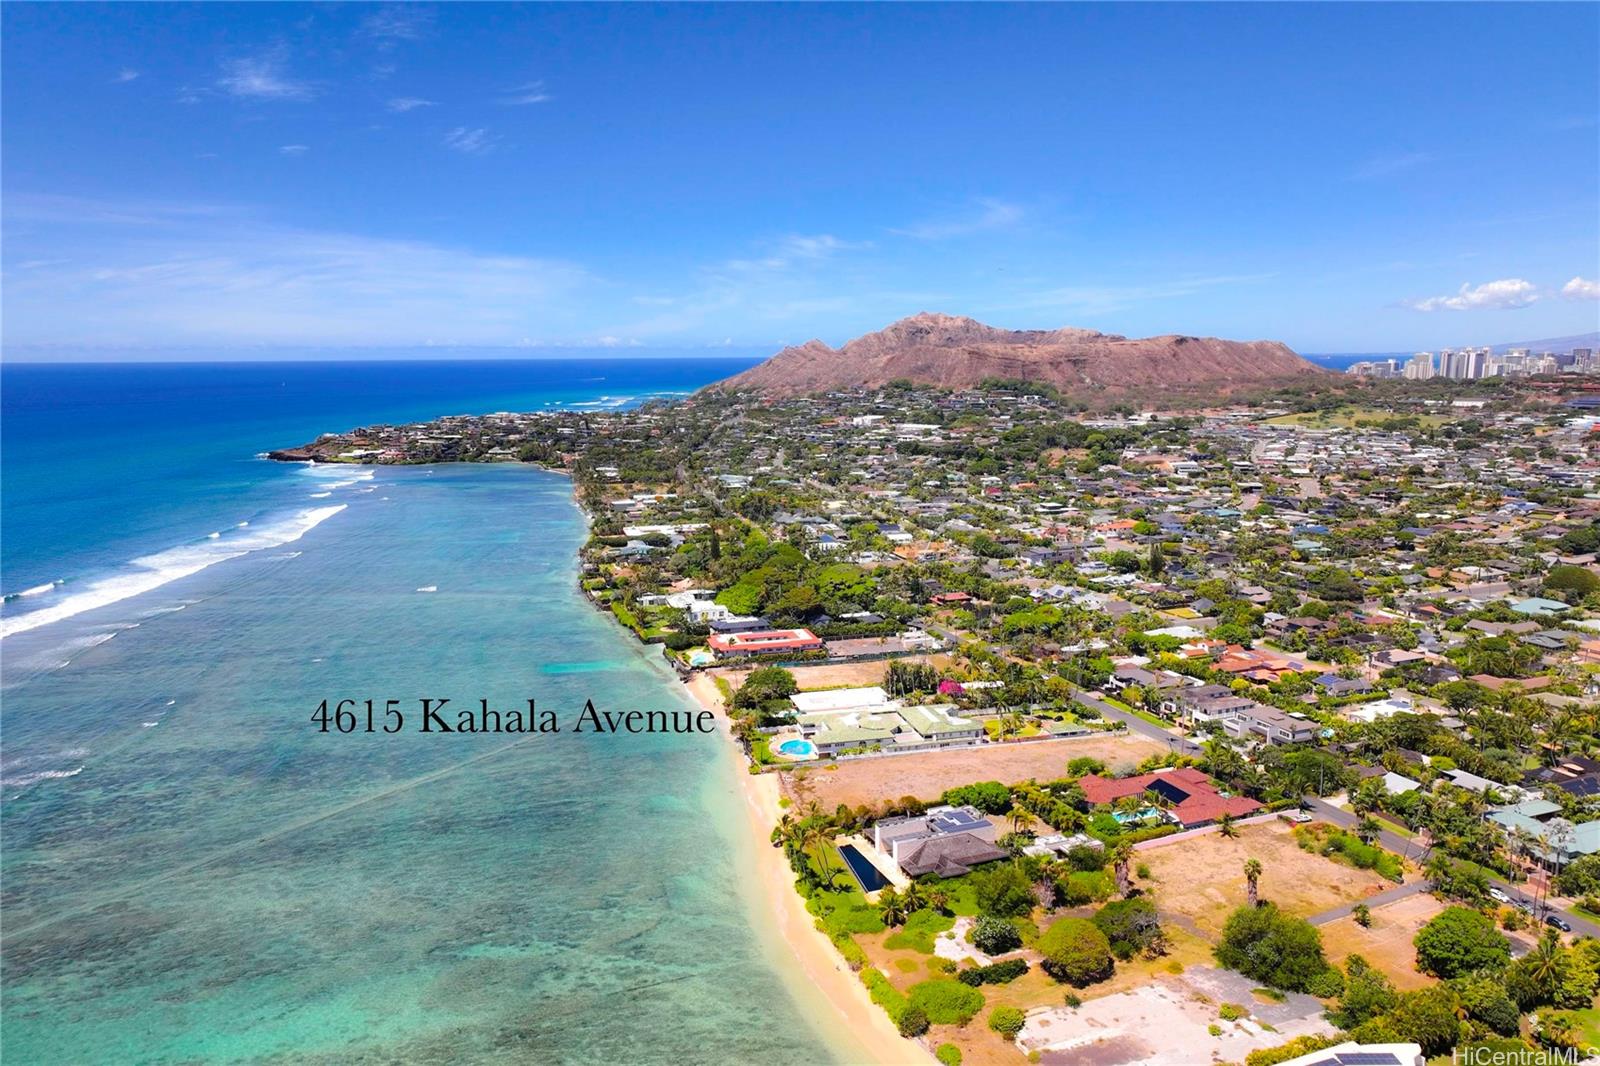  4615 Kahala Avenue Honolulu, HI 96816